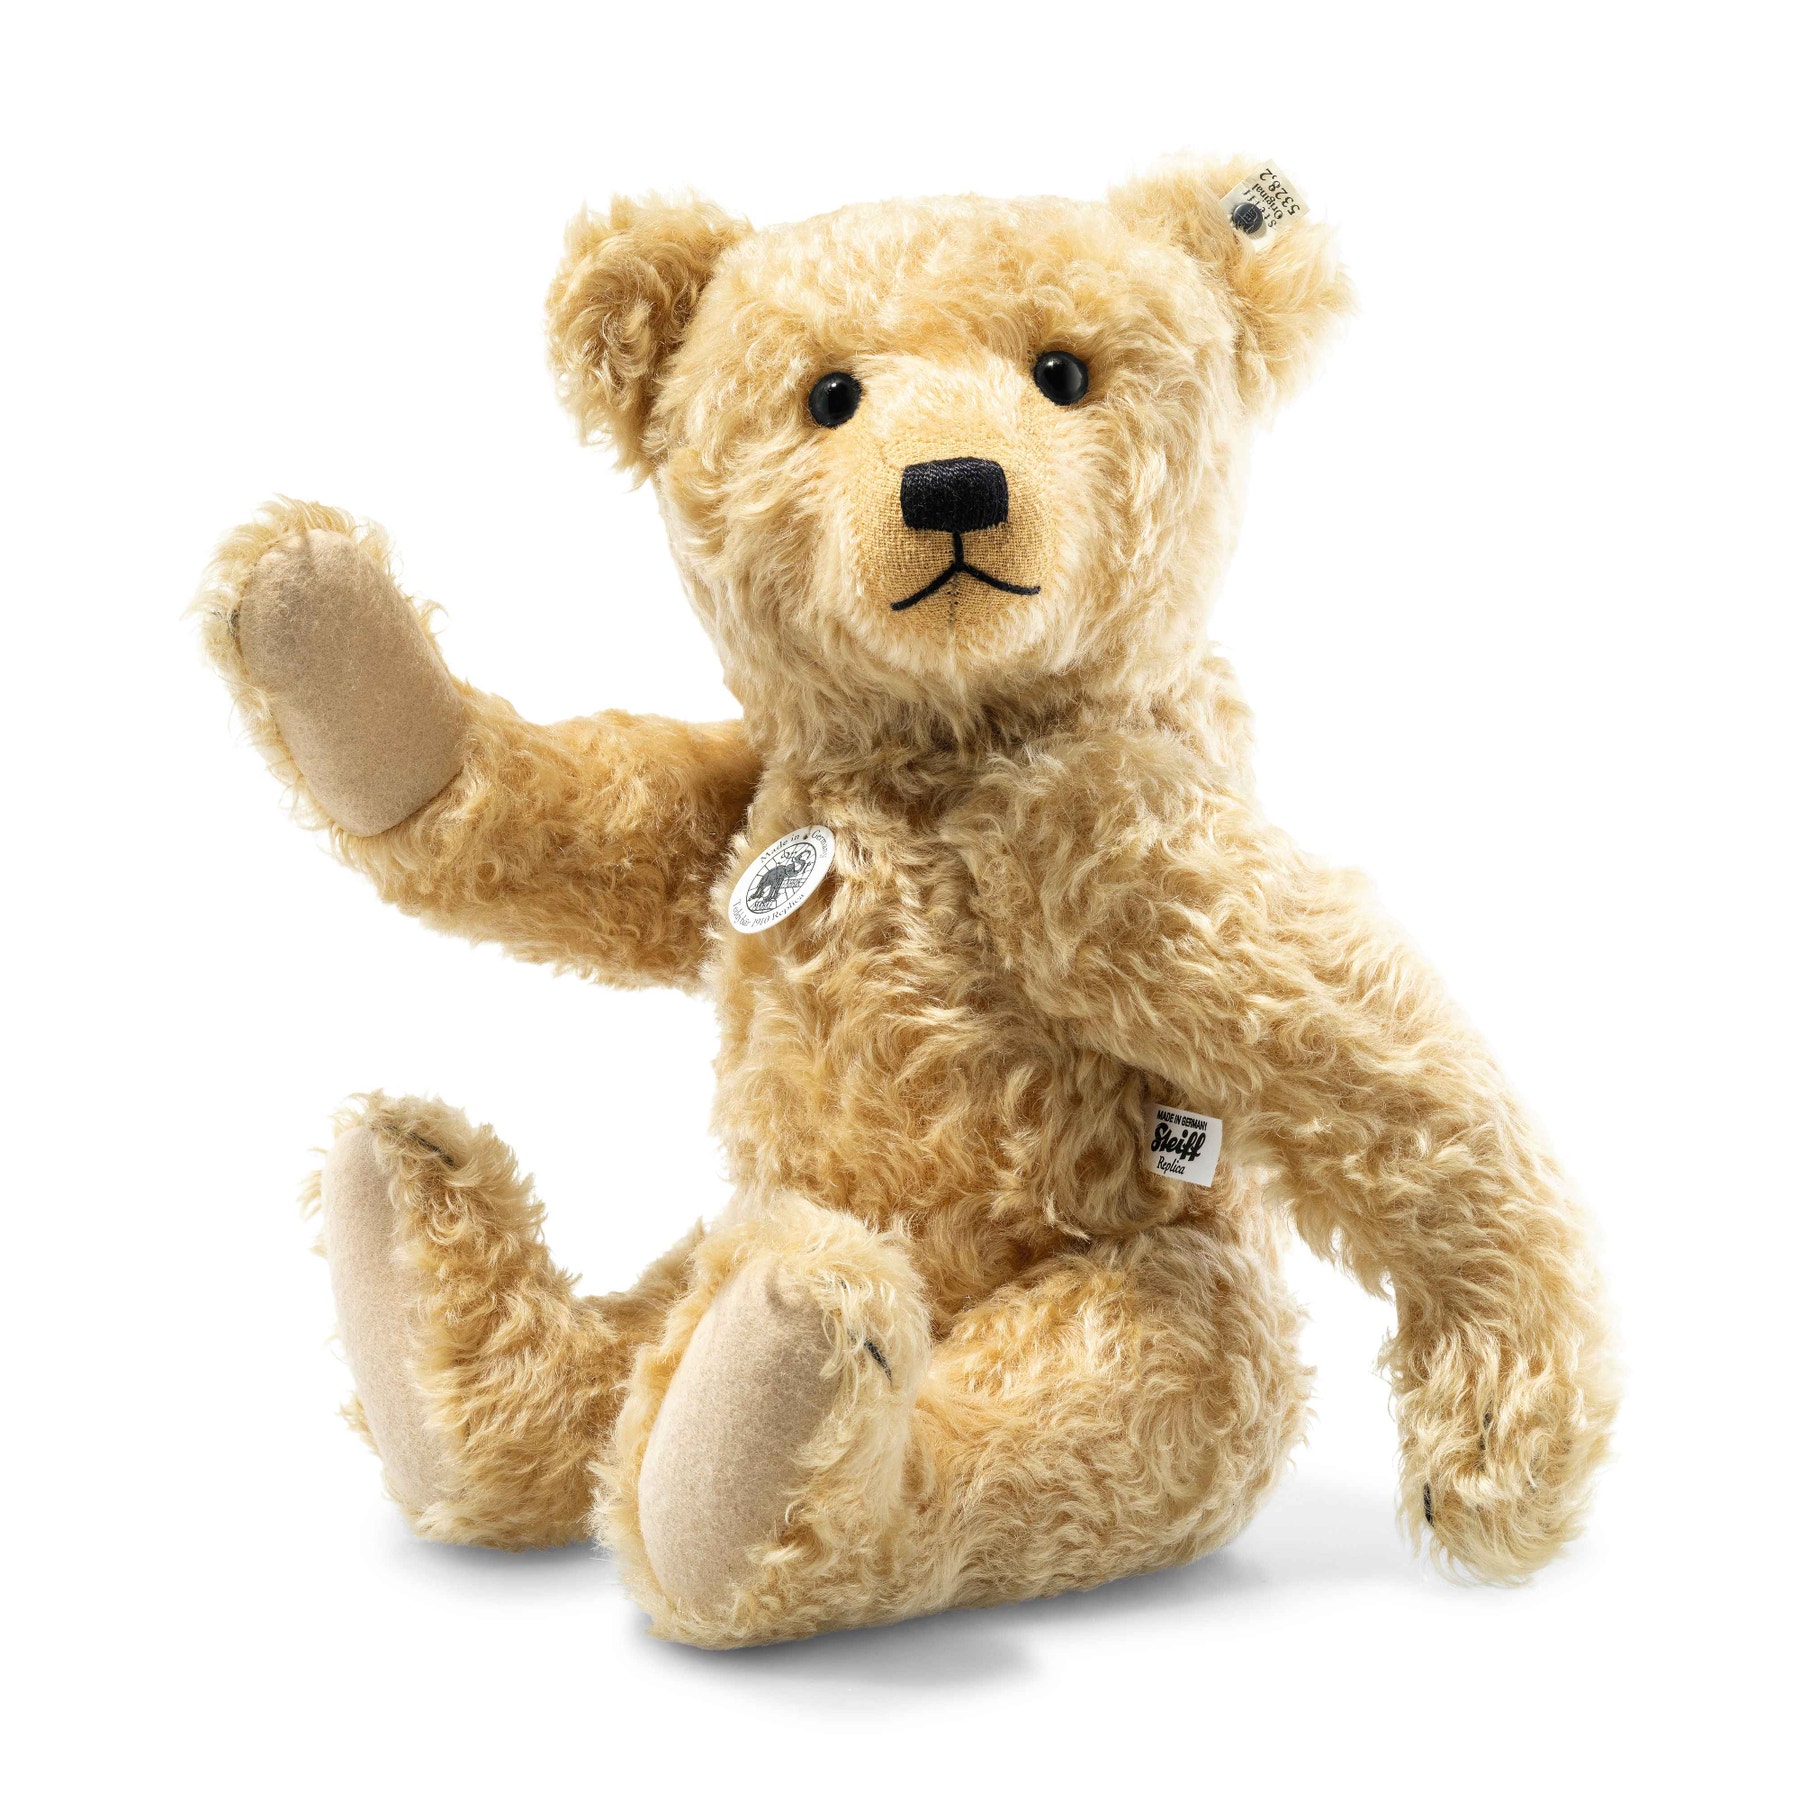 Teddy bear replica 1910